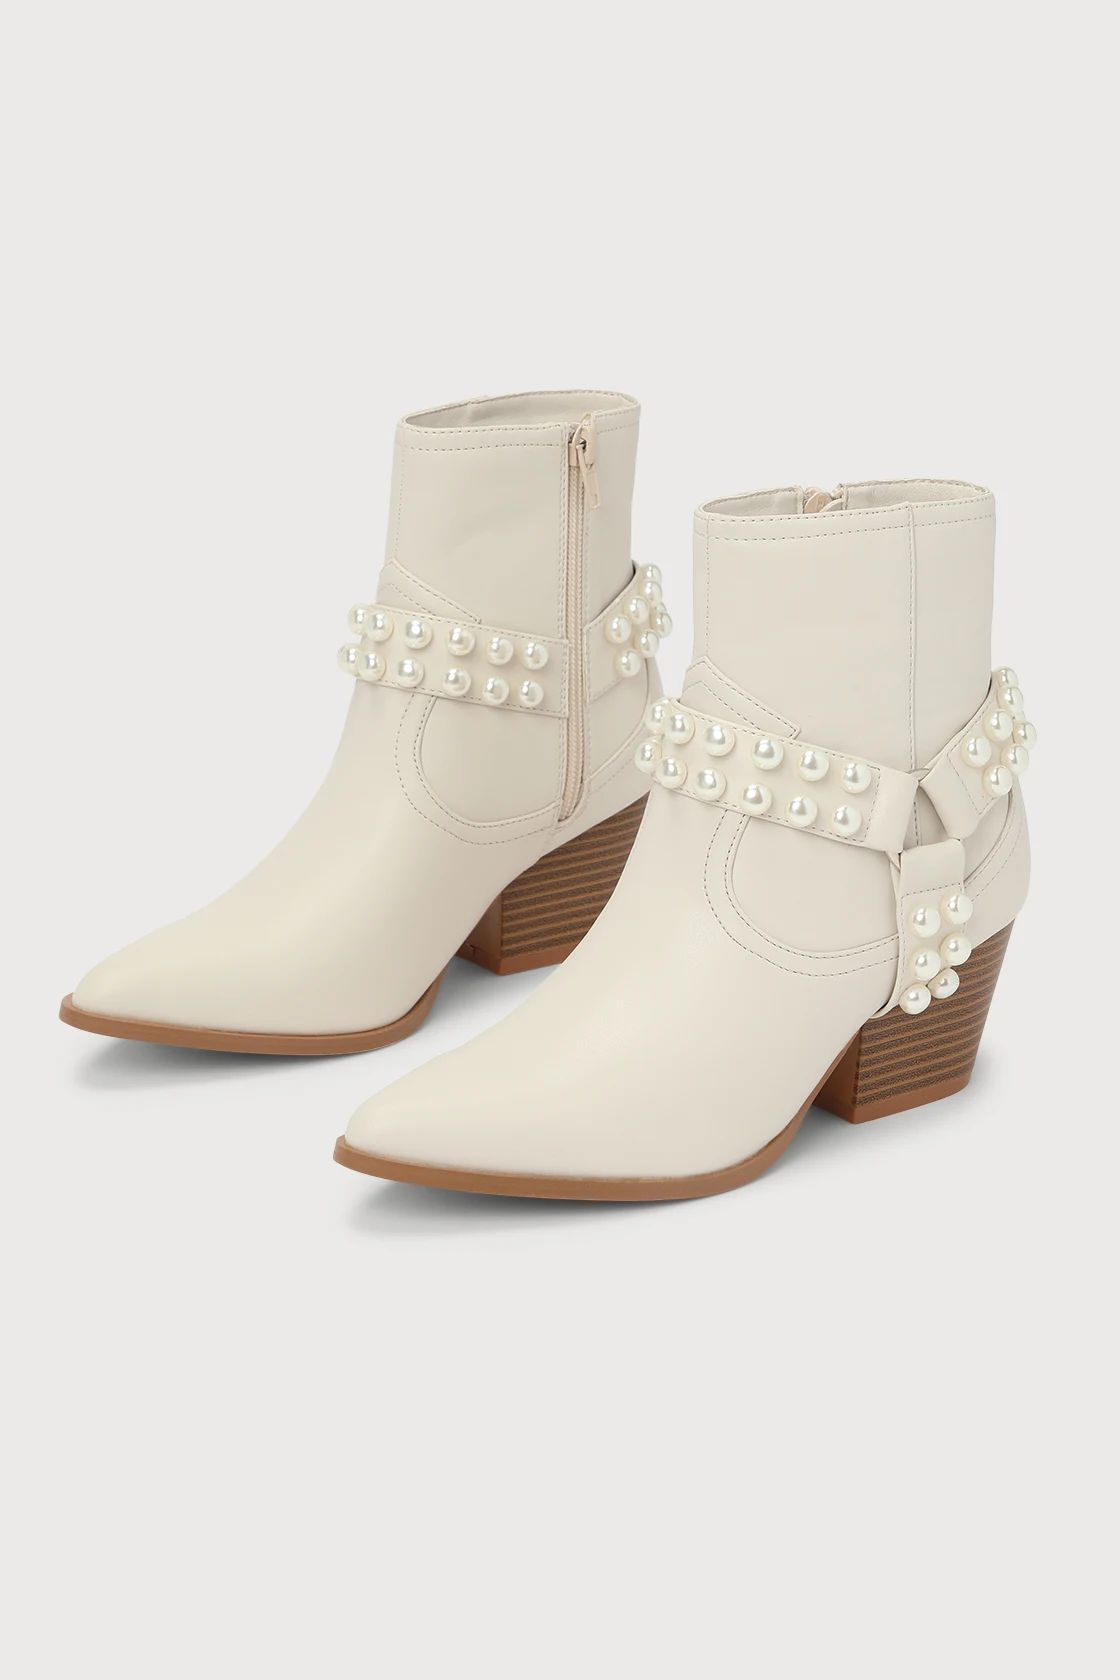 Prejean Bone Pearl Pointed-Toe Ankle Western Boots | Lulus (US)